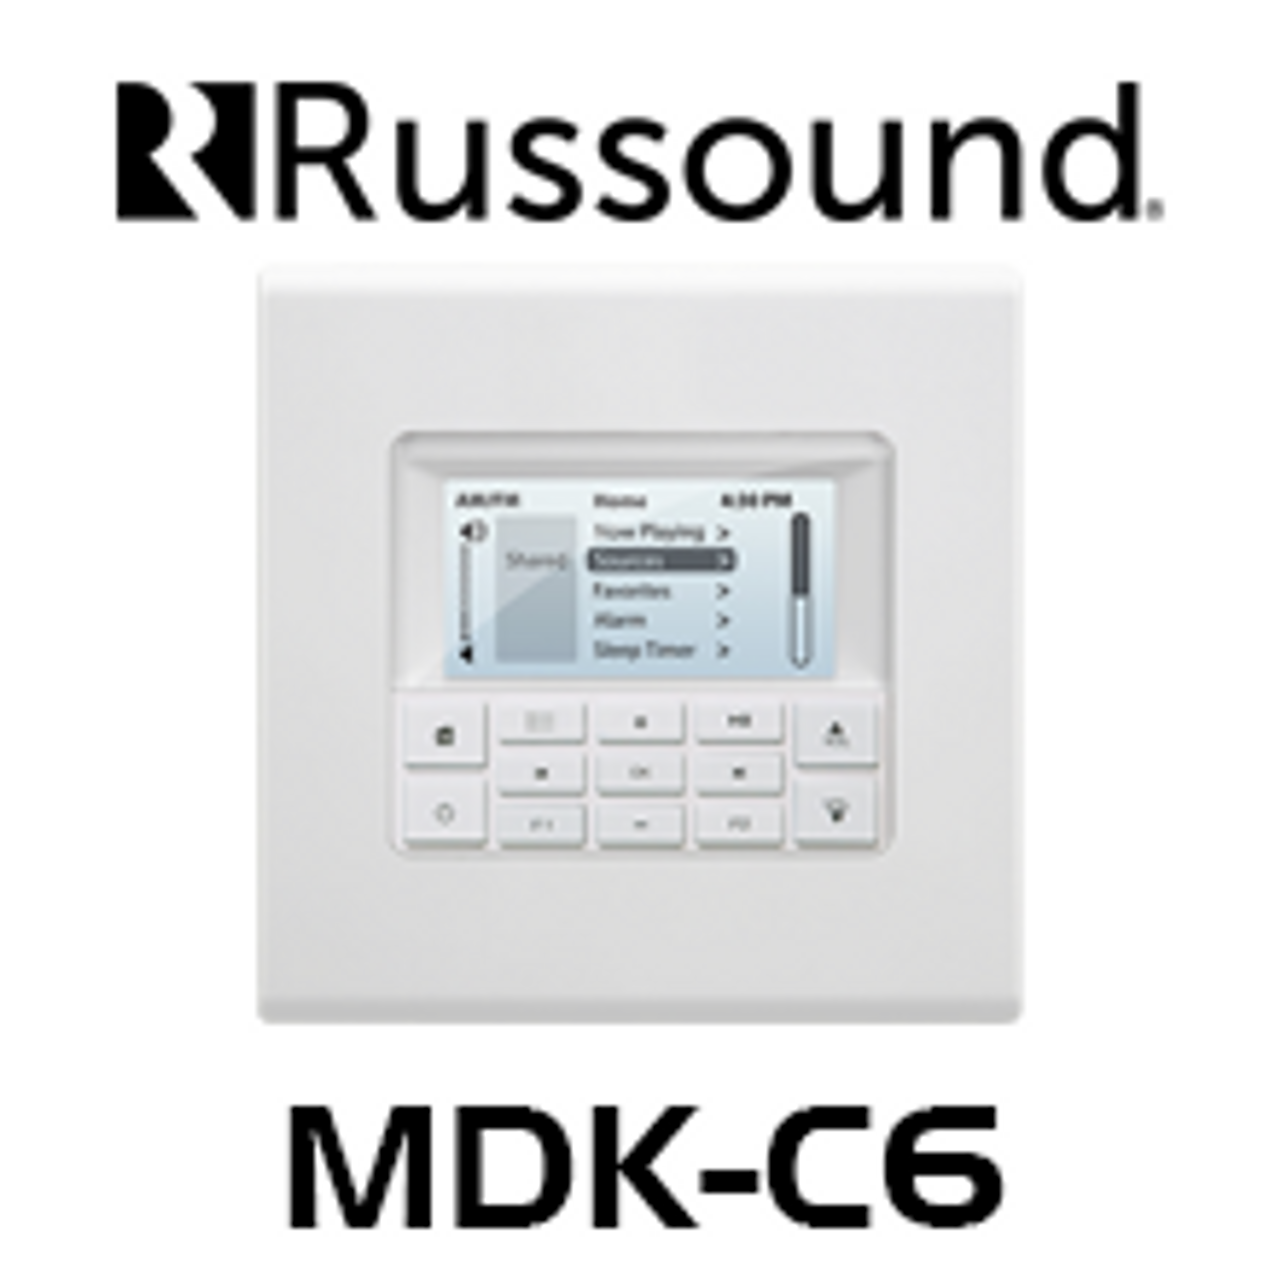 Russound MDK-C6 Multiline Display Keypad